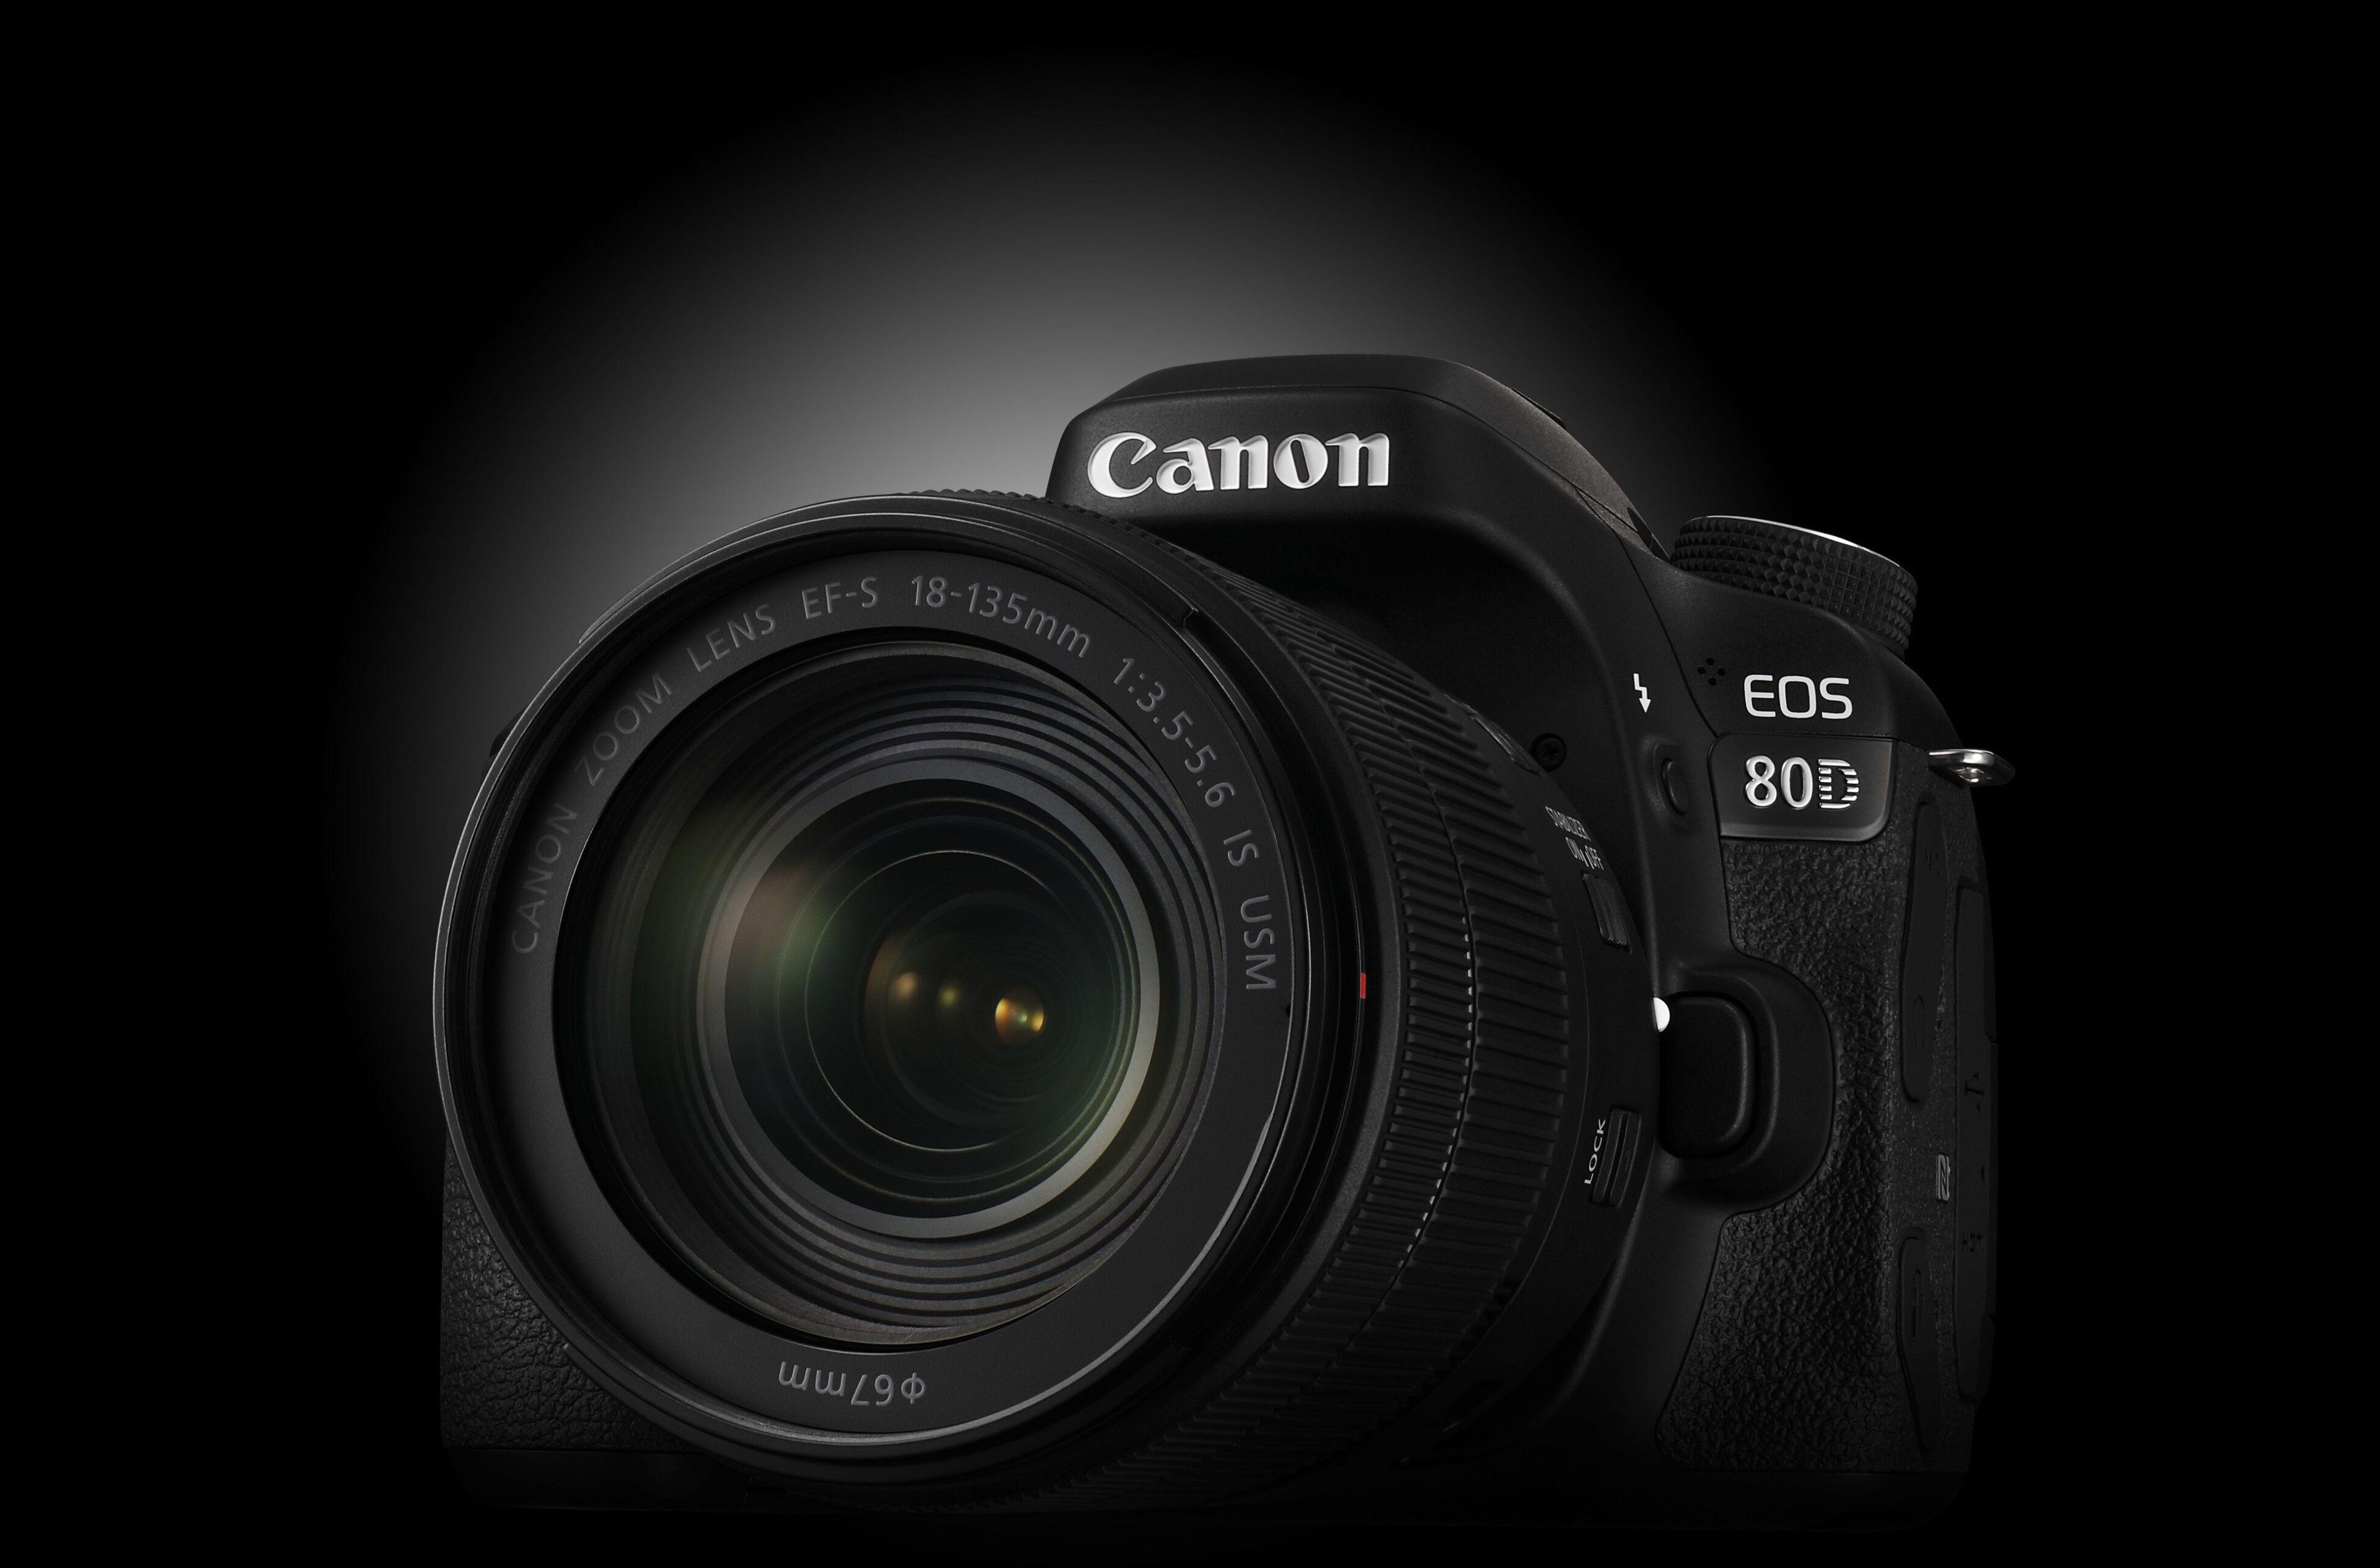 canon eos 80d 4k wallpaper download free for pc HD. Canon eos, Eos, Canon dslr camera